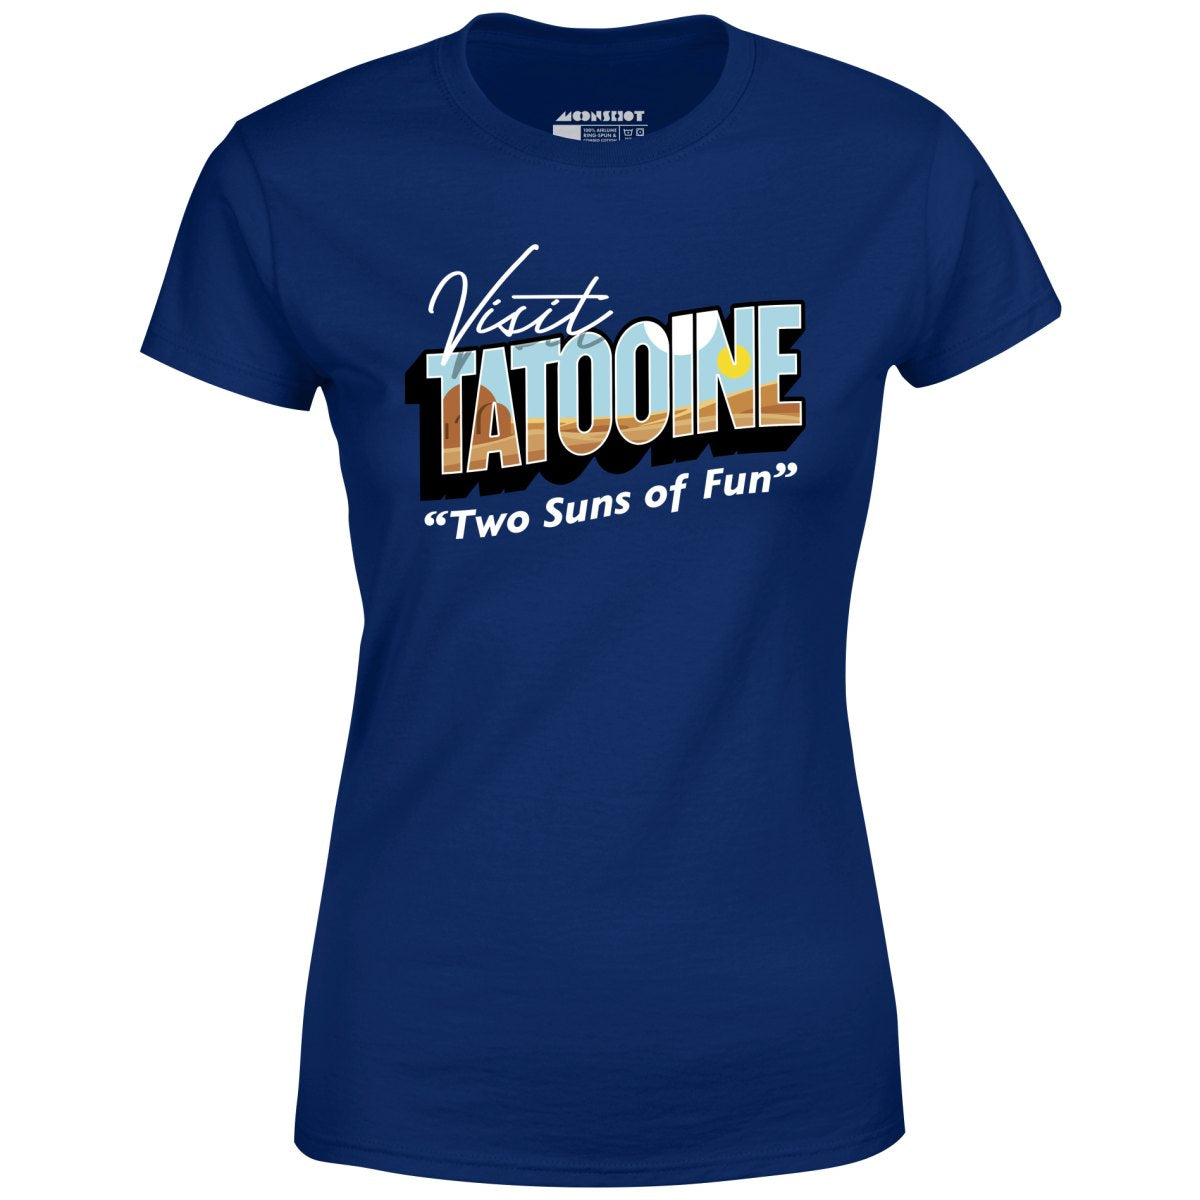 Visit Tatooine - Two Suns of Fun - Women's T-Shirt